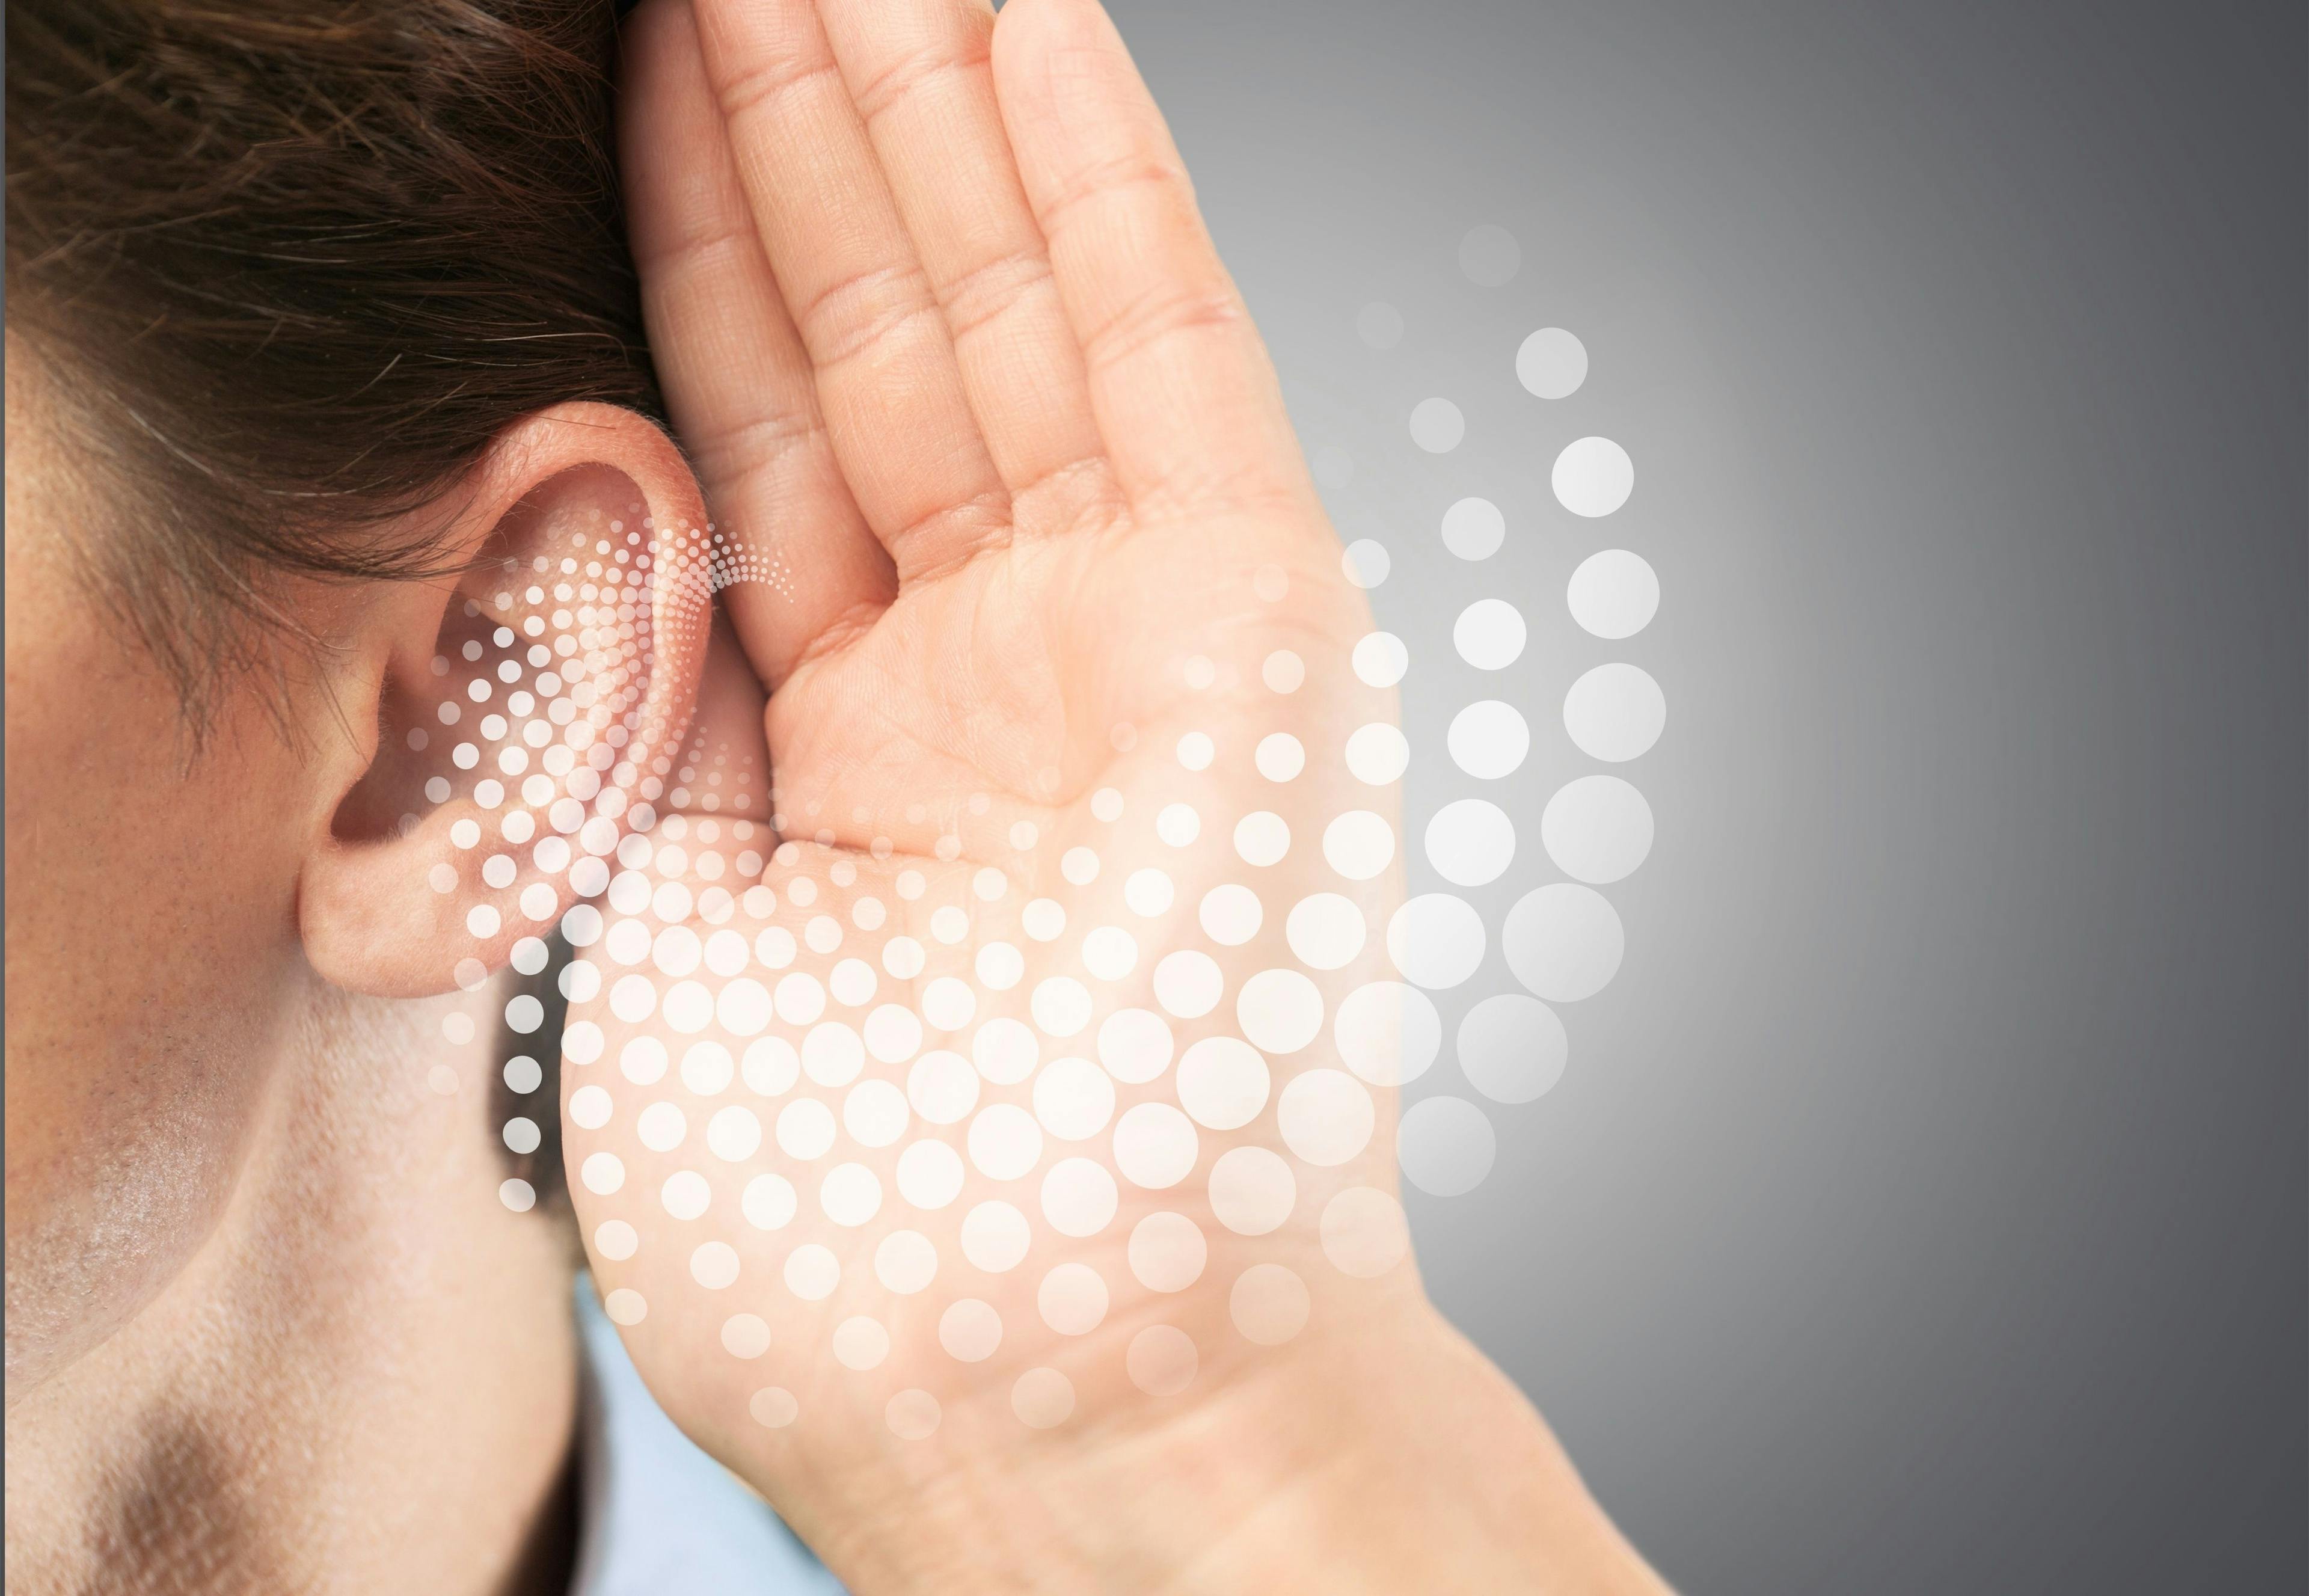 Hearing sound test loss adult disorder aid  | Image credit: BillionPhotos.com - stock.adobe.com